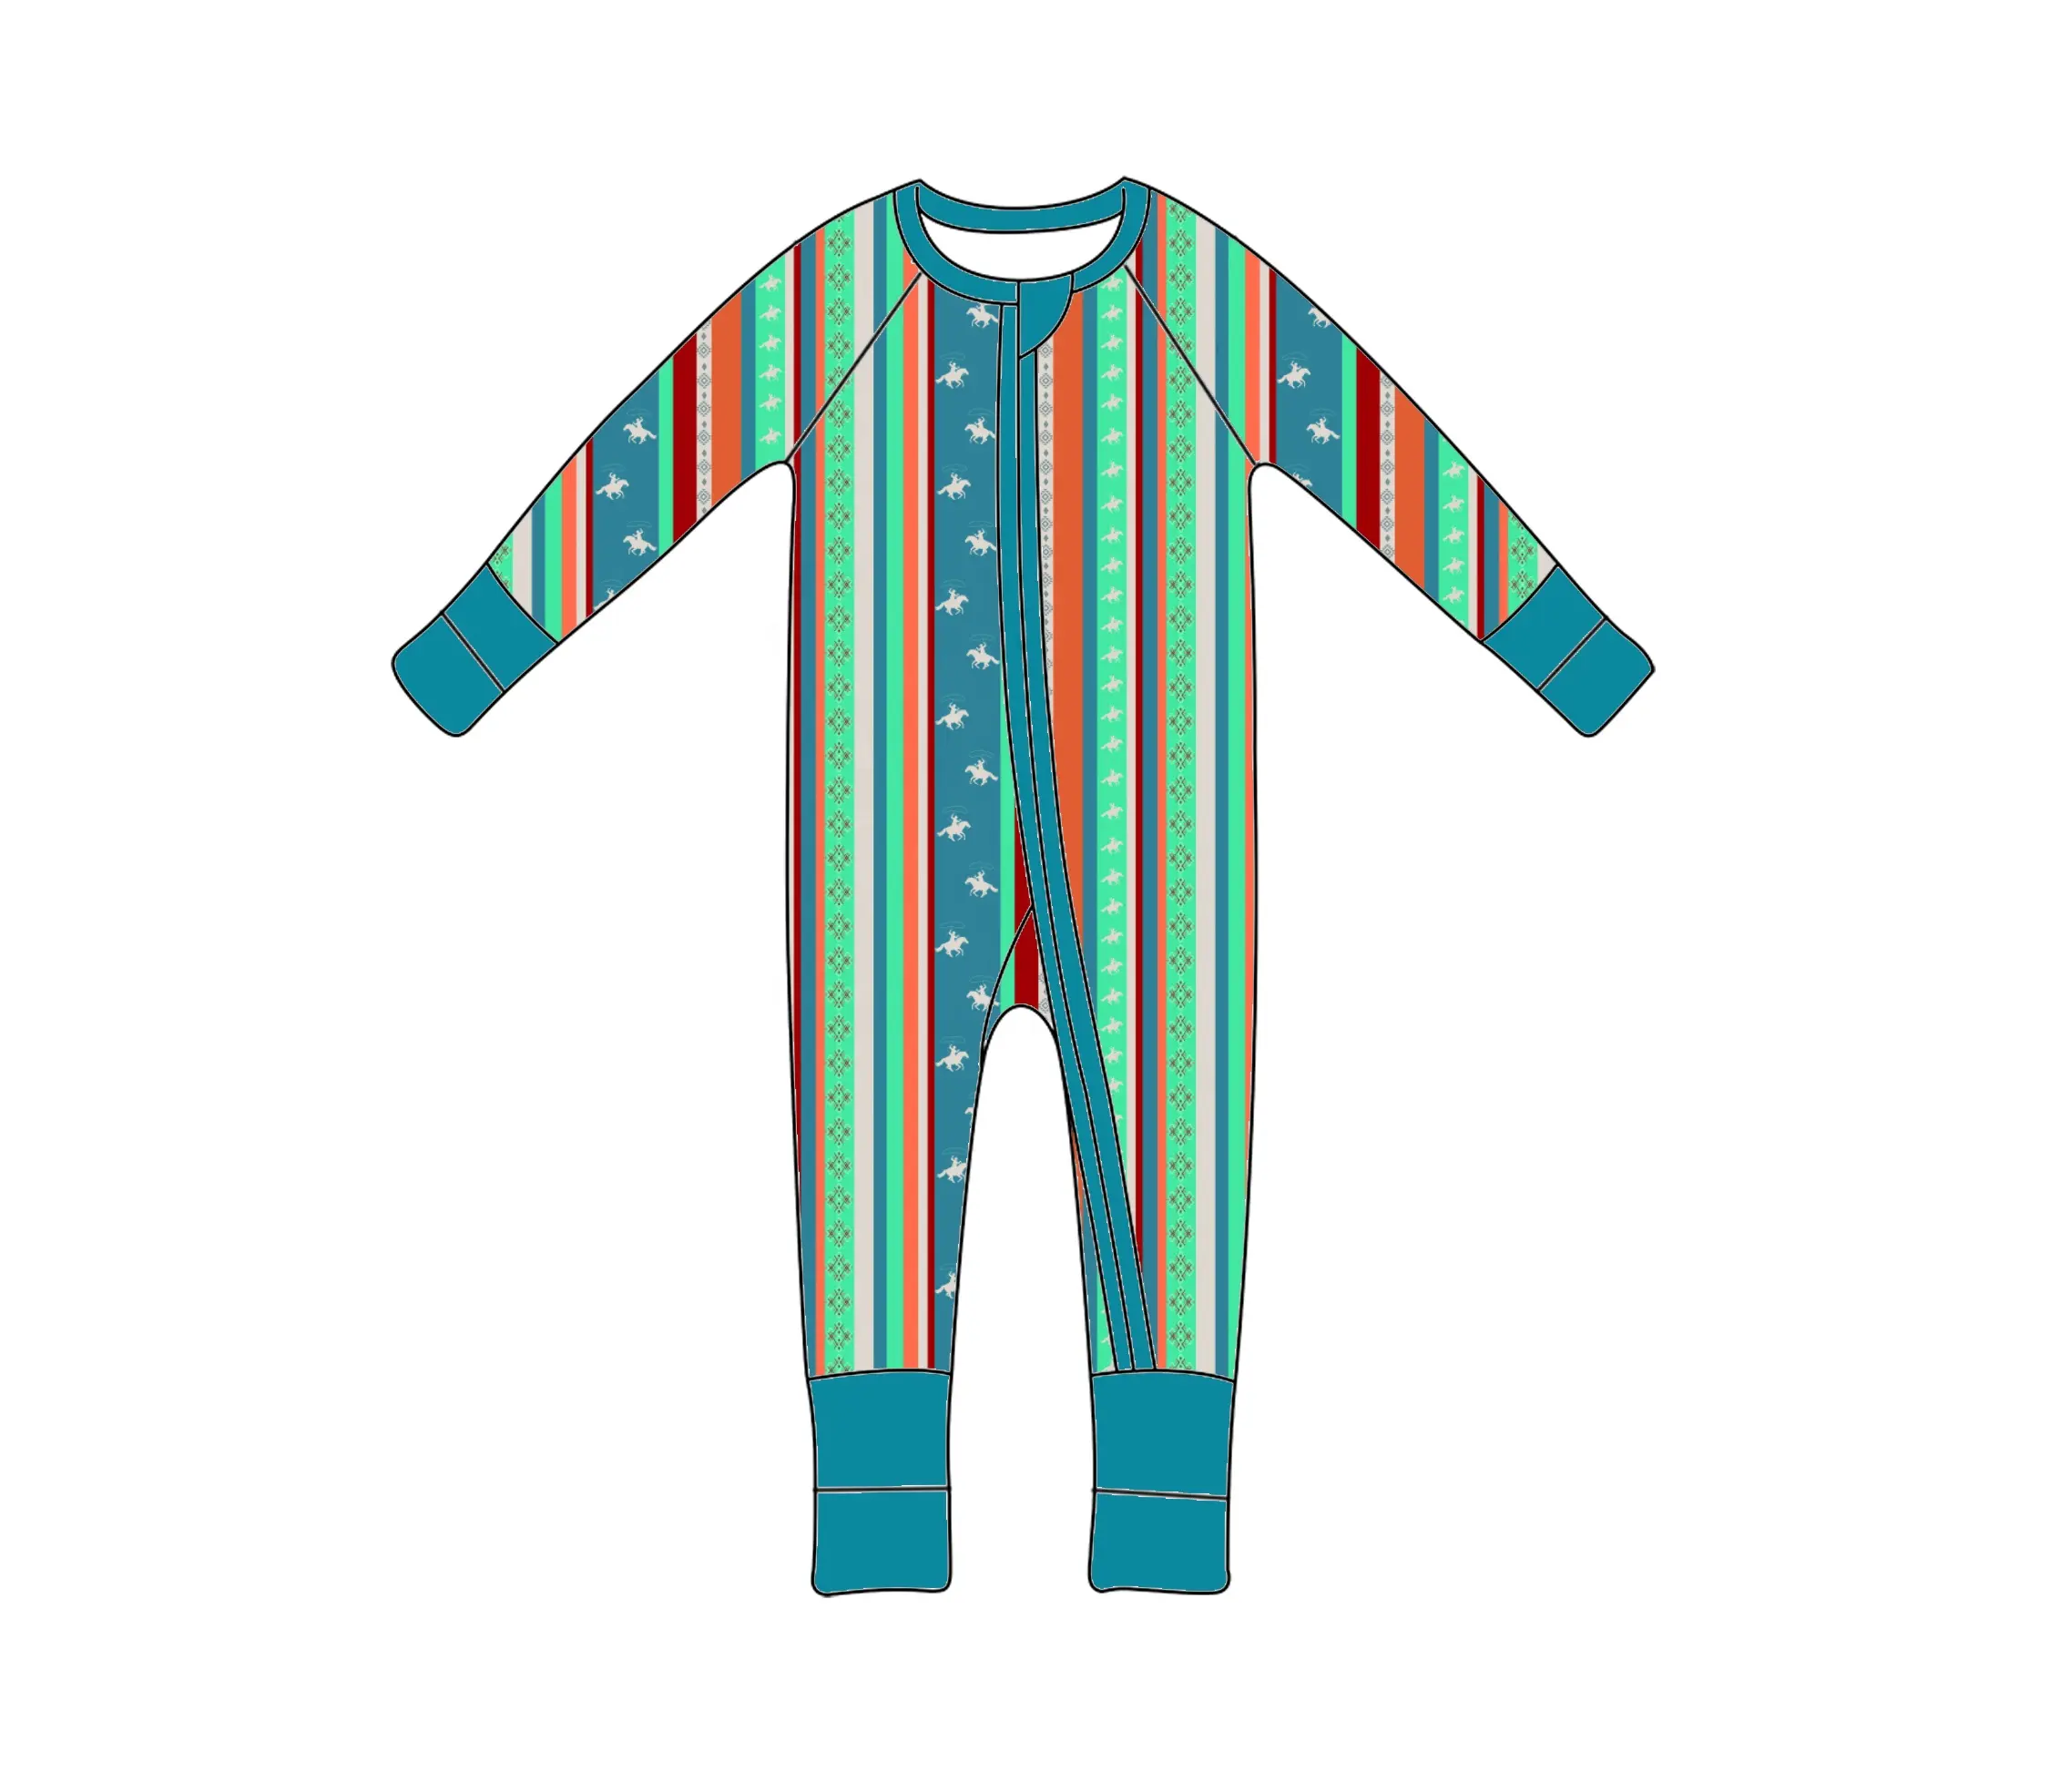 Liangzhe Piyama, baju tidur bayi motif kustom, baju monyet bambu organik, piyama anak balita